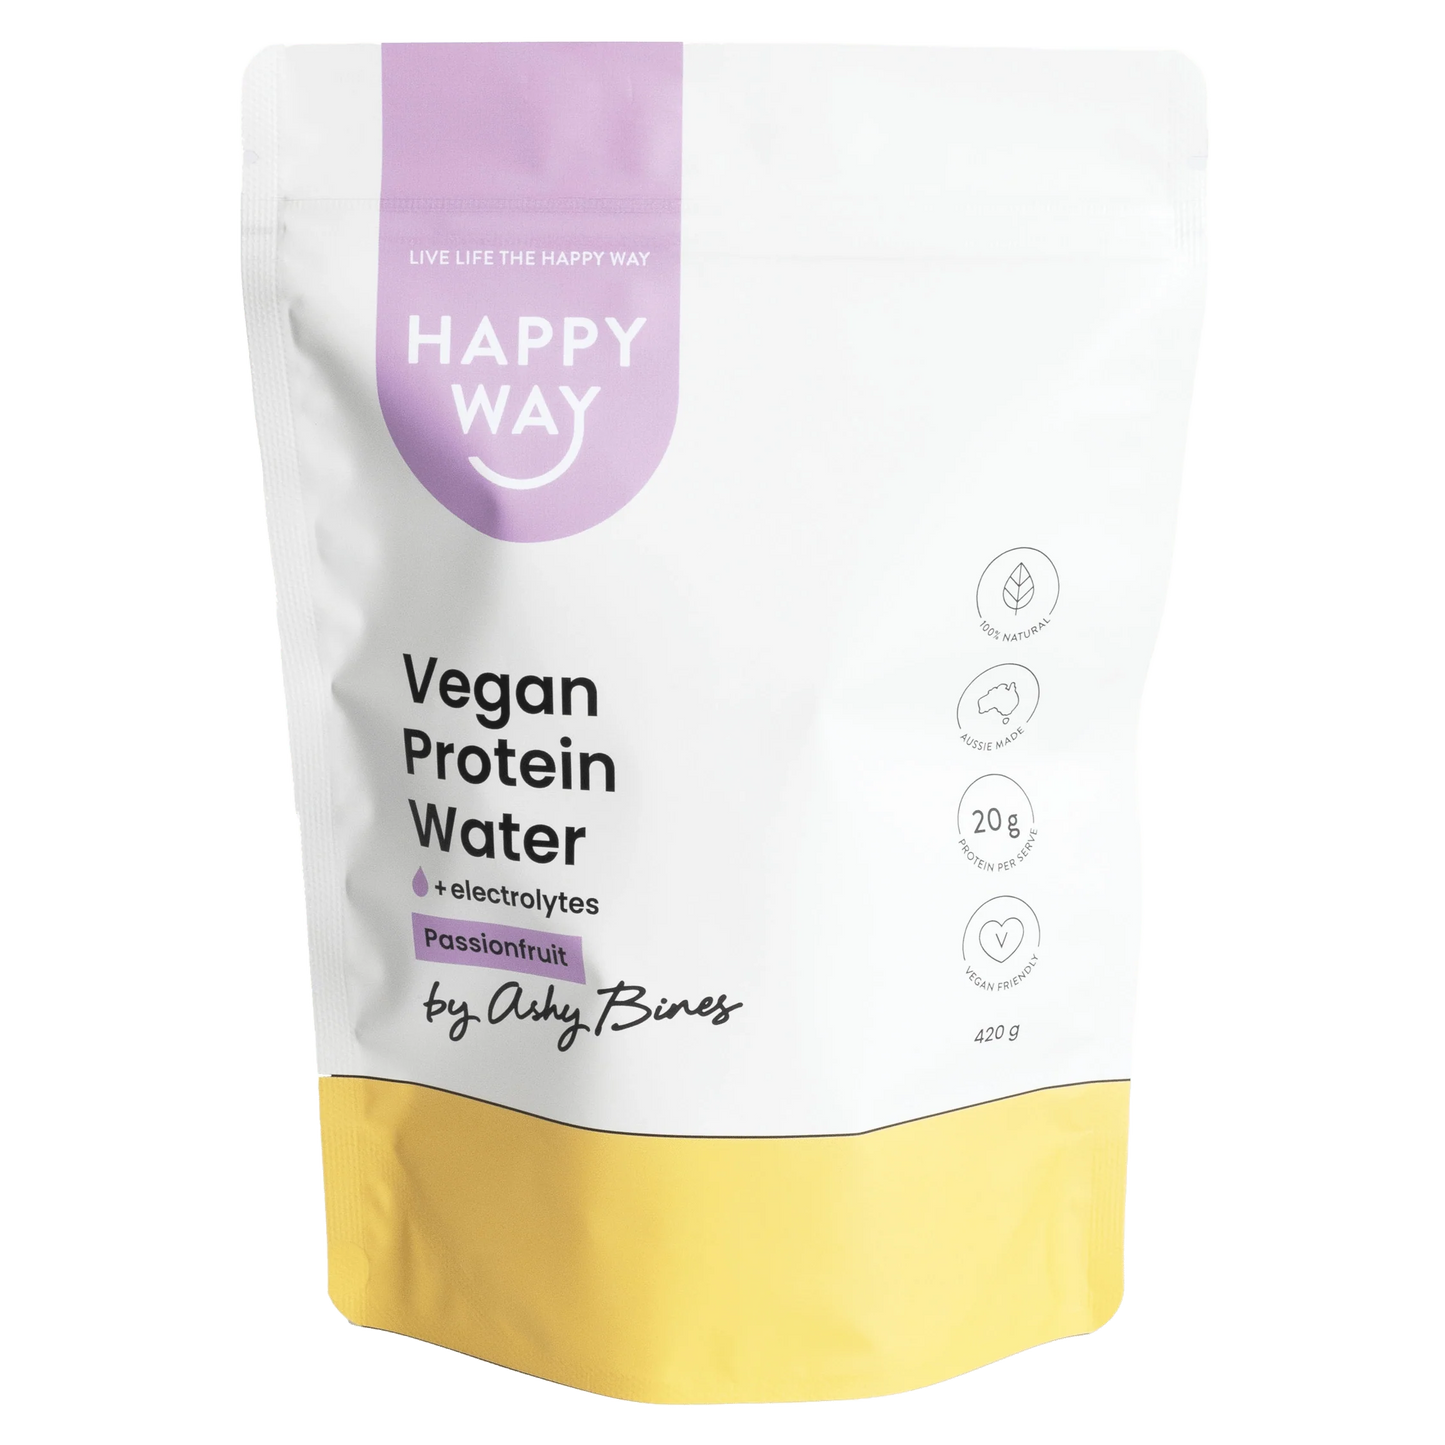 Happy Way Ashy Bines Vegan Protein Water 420g, Passionfruit